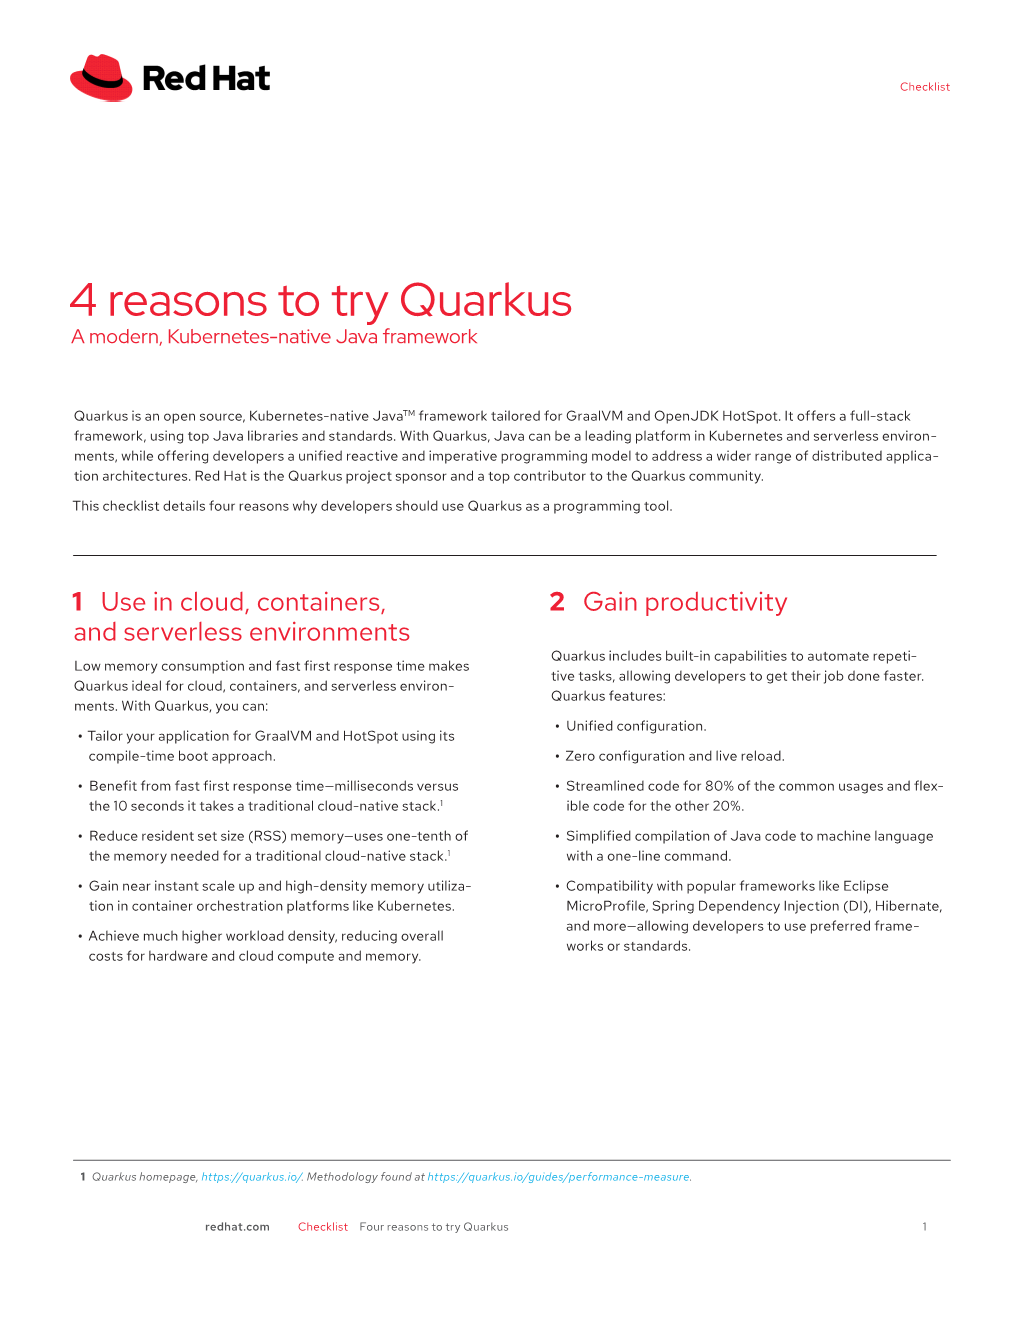 4 Reasons to Try Quarkus a Modern, Kubernetes-Native Java Framework